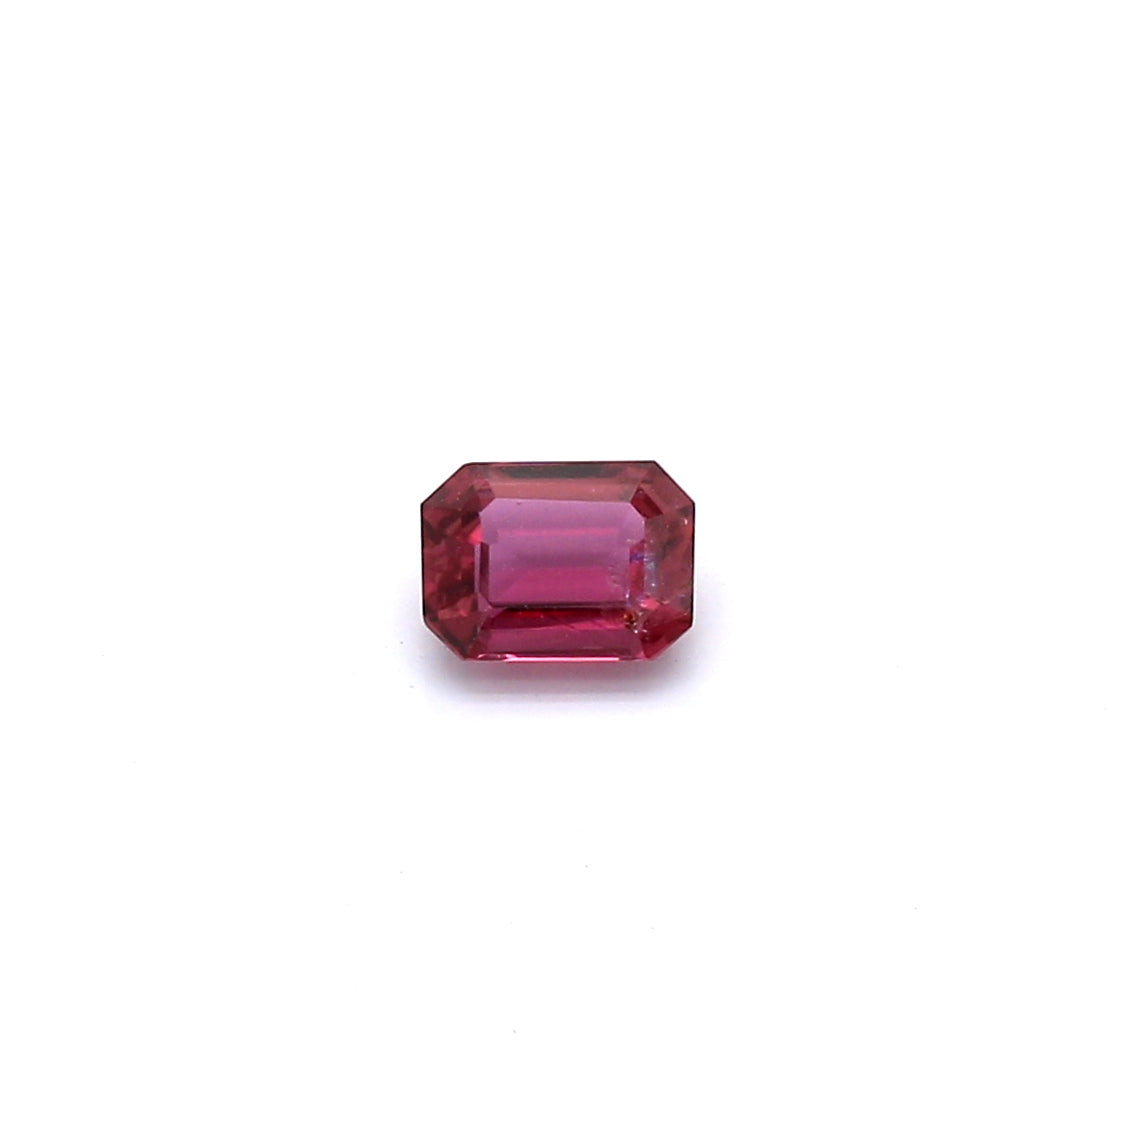 0.38ct Purplish Red, Octagon Ruby, Heated, Thailand - 4.79 x 3.58 x 2.01mm